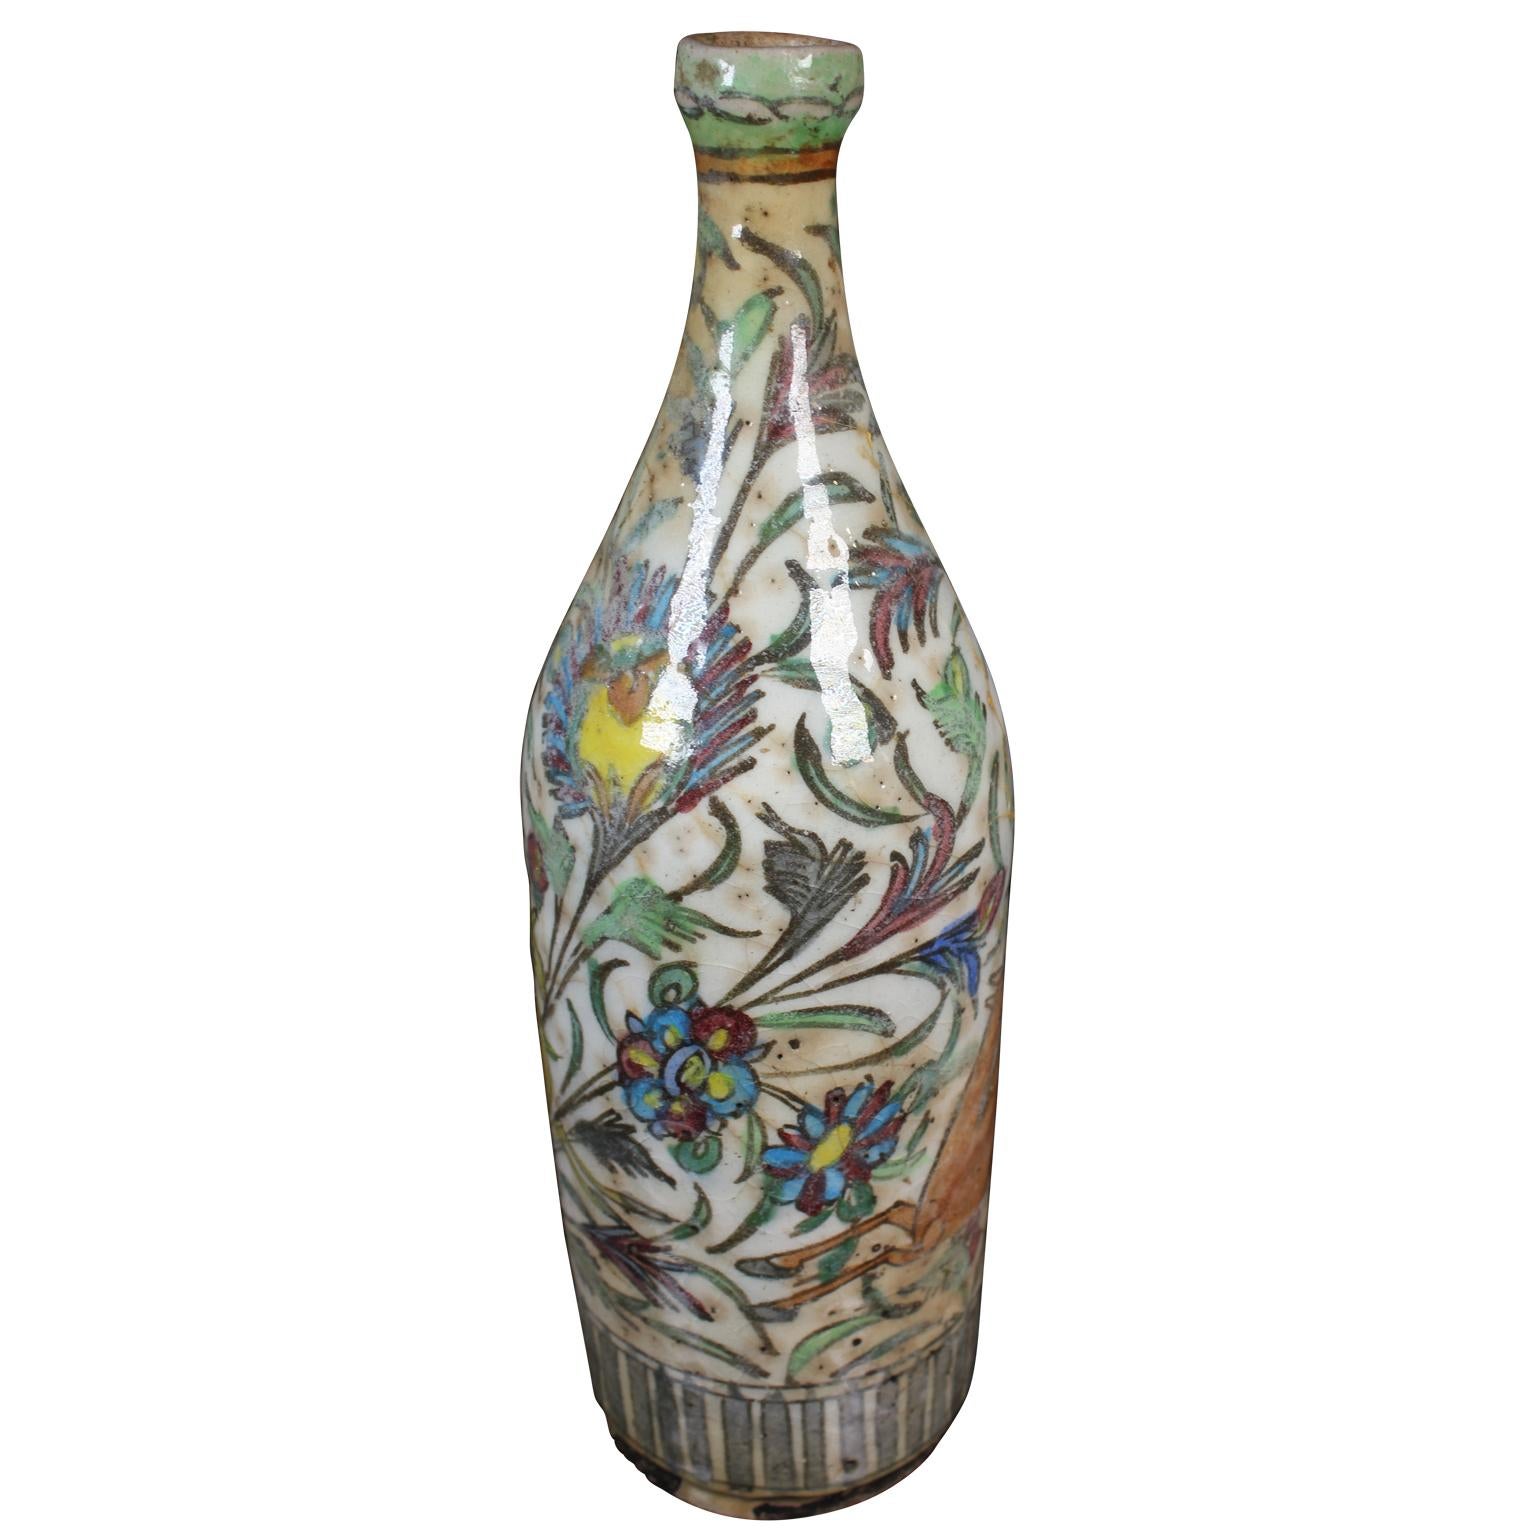 Balkan 17th Century Persian Wine Bottle or Vase Repaired with Kintsugi Method